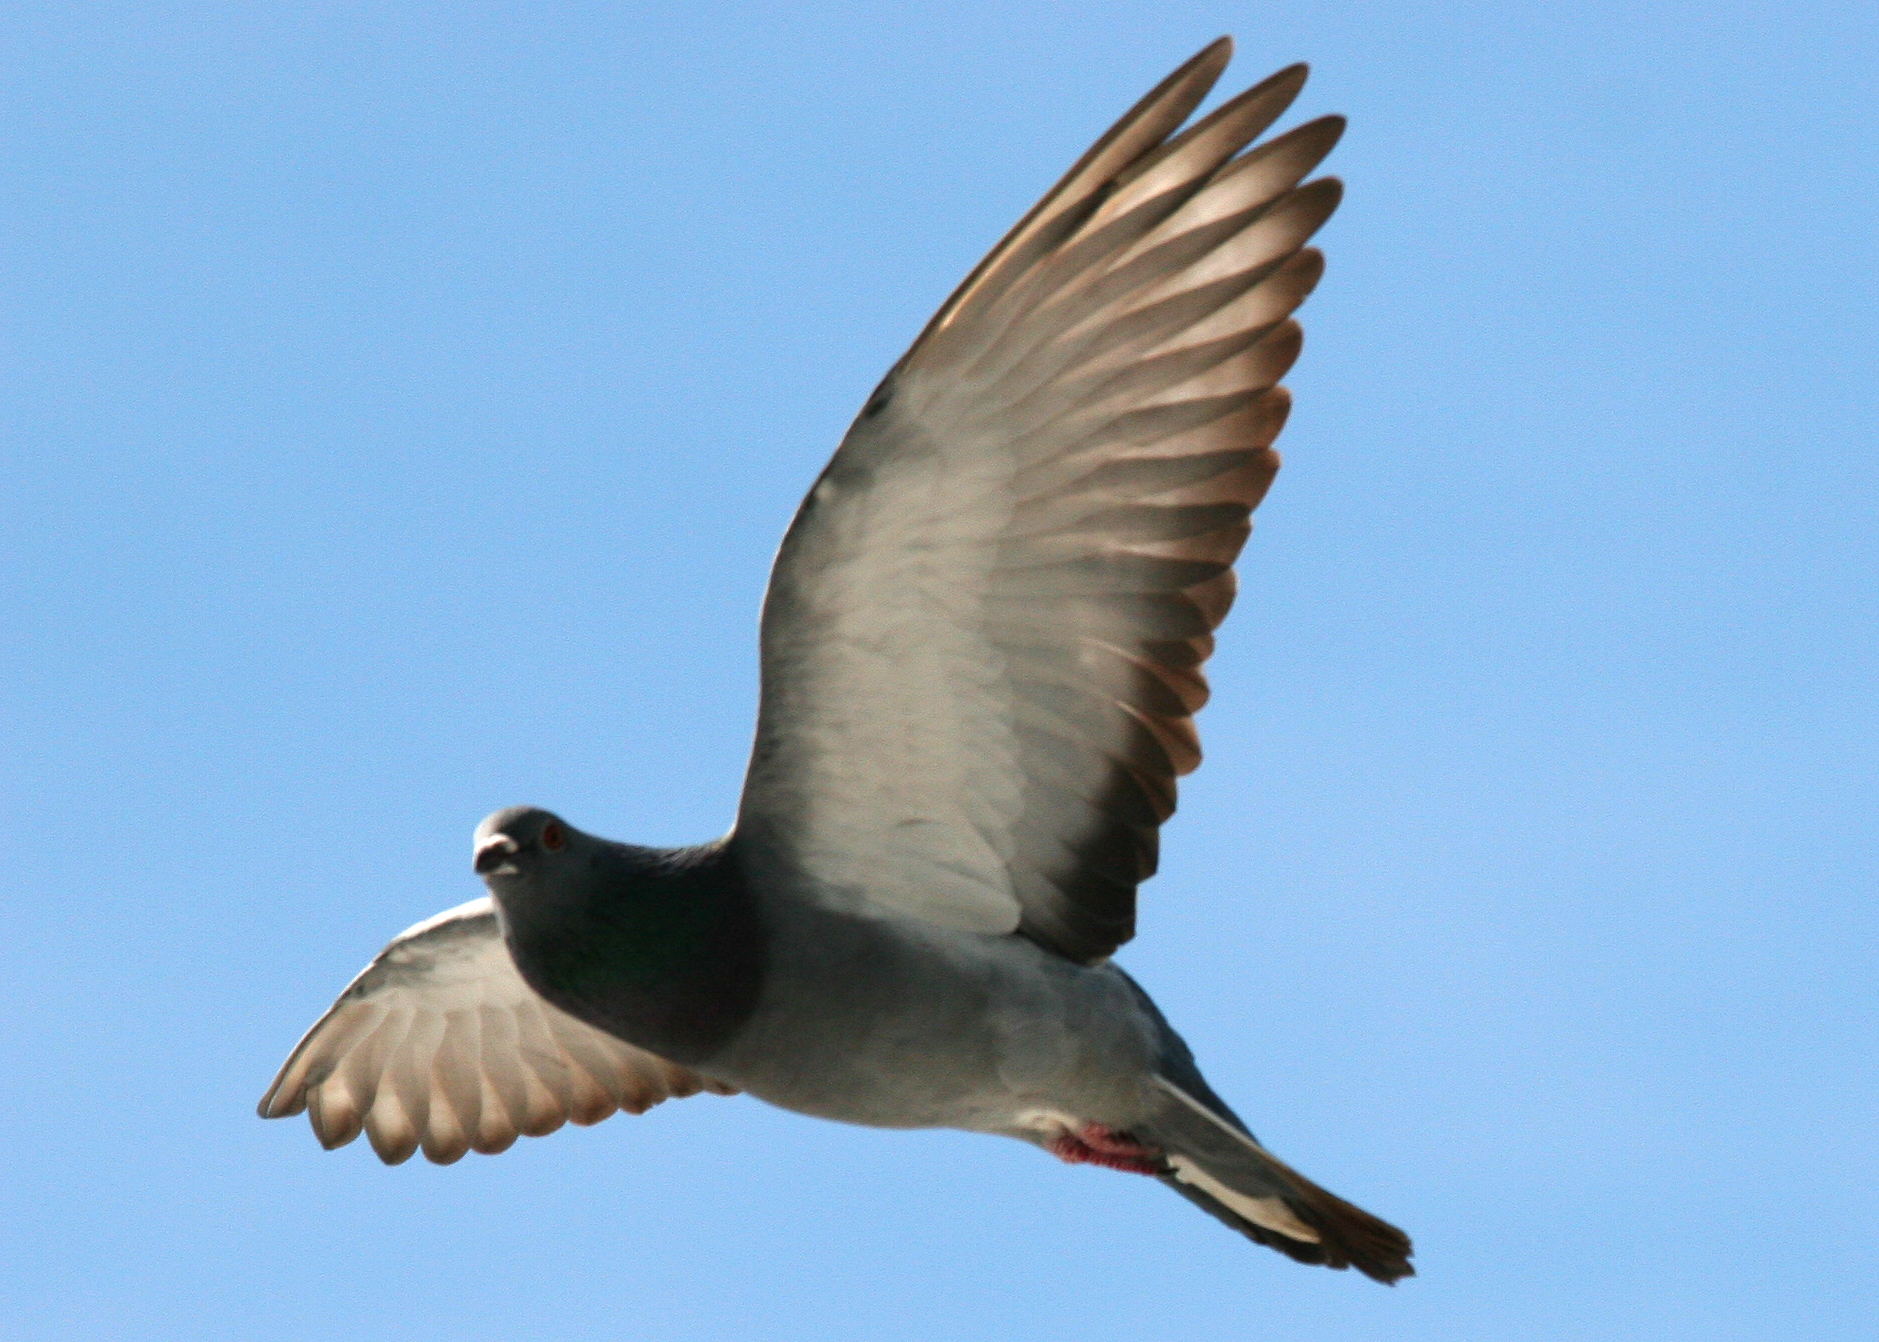 a single bird flying through a blue sky